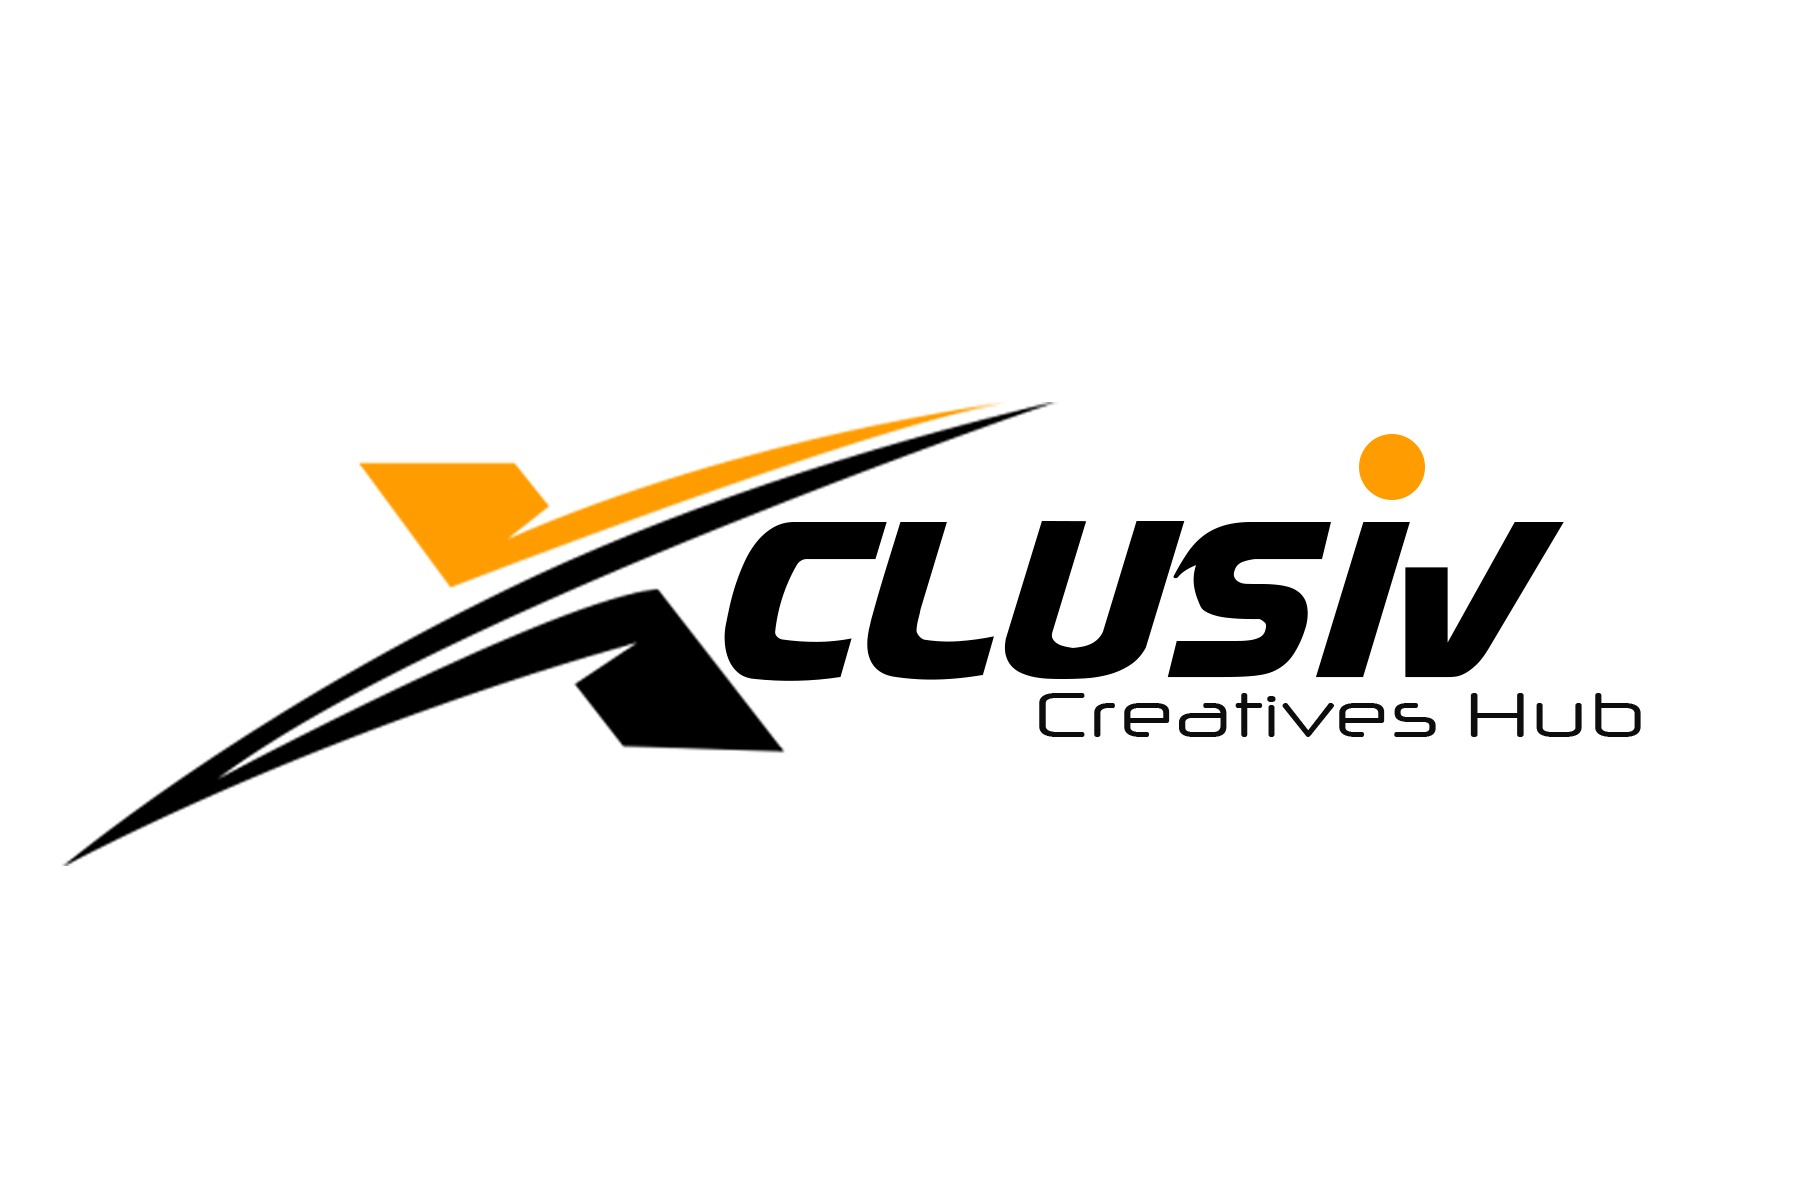 Xclusiv Creatives Hub